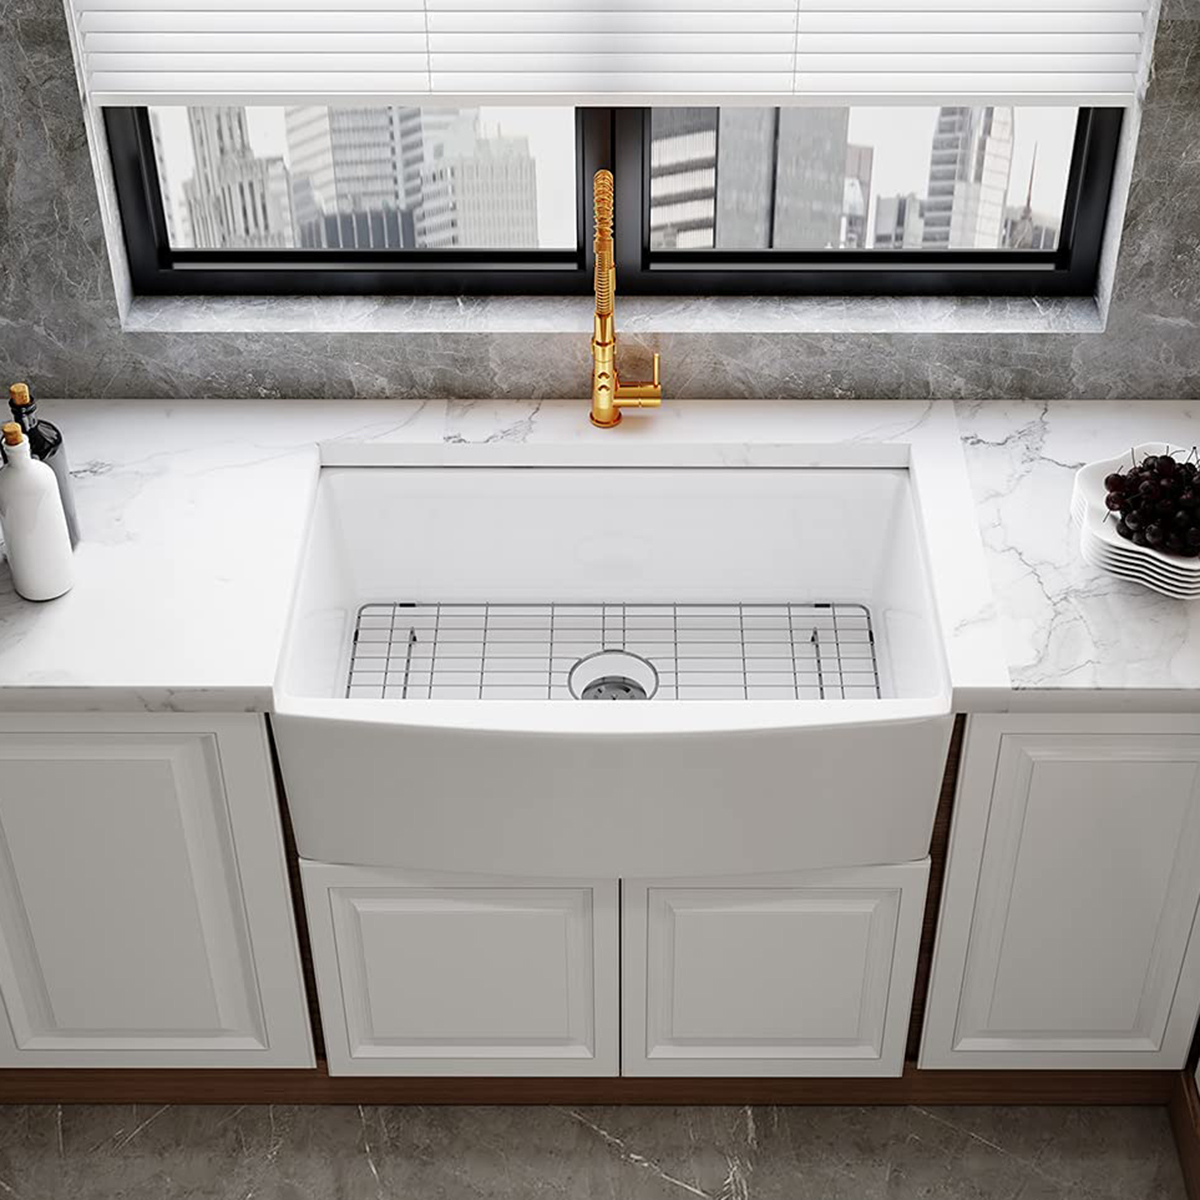 Aquacubic cUPC certified 33" x 21" White Ceramic Kitchen Single Bowl Apron Front Farmhouse Sink